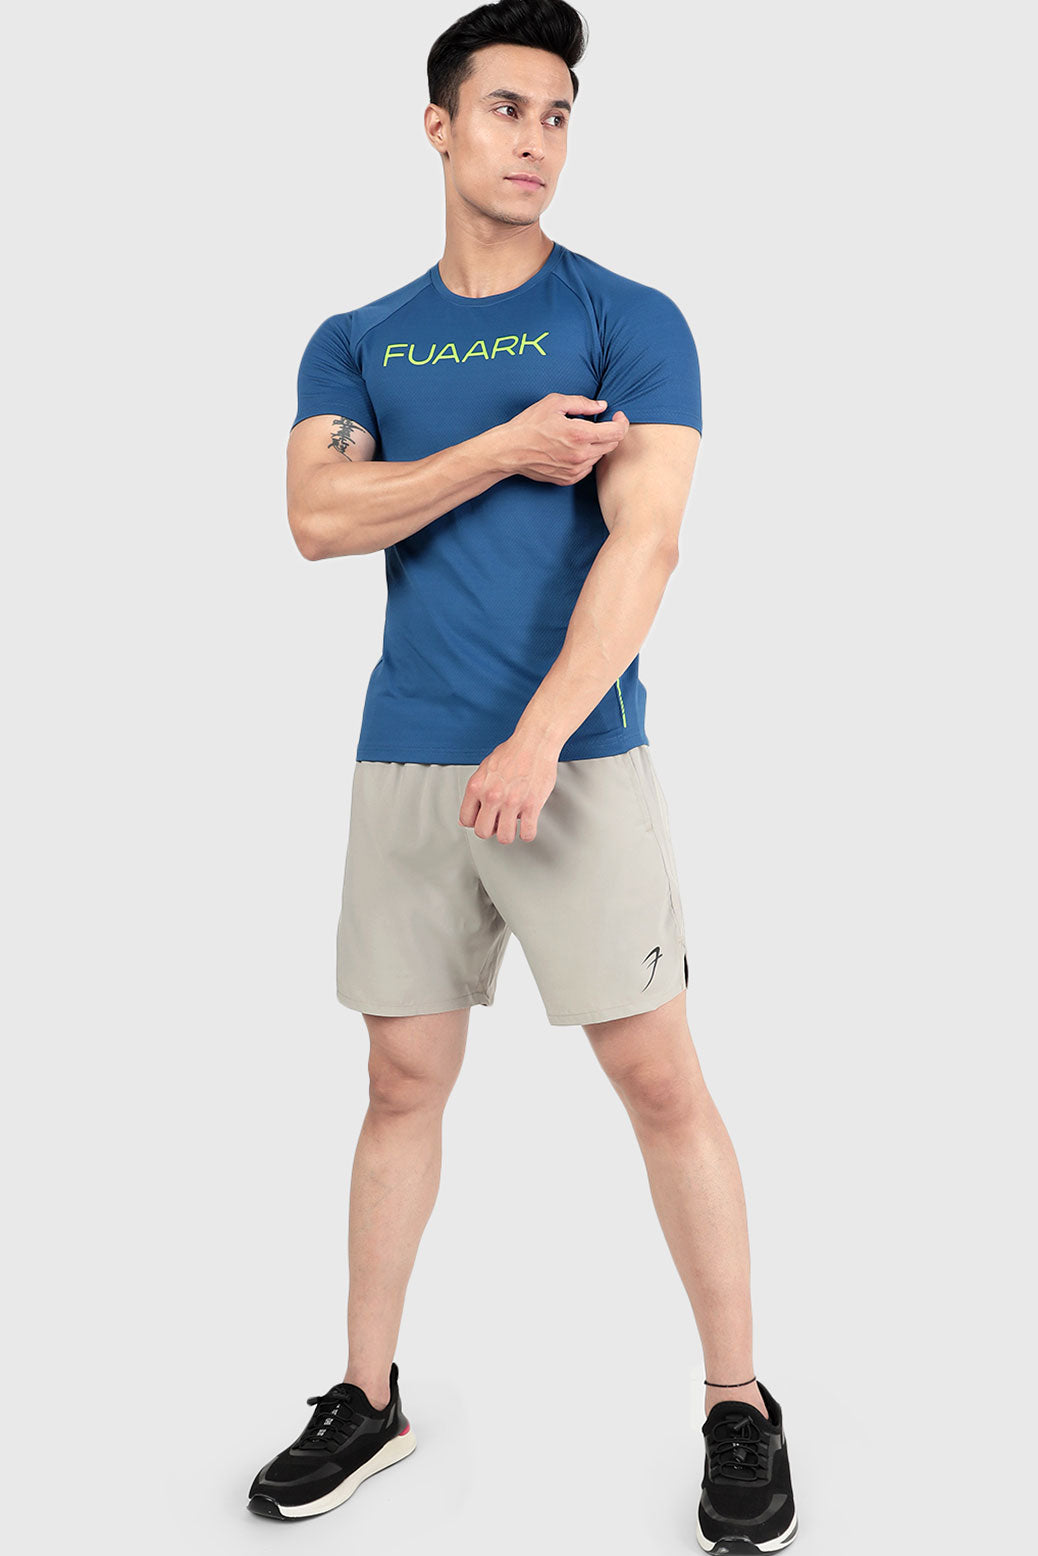 Buy Aura Textured Tshirt Teal For Men Online at Fuaark – FUAARK